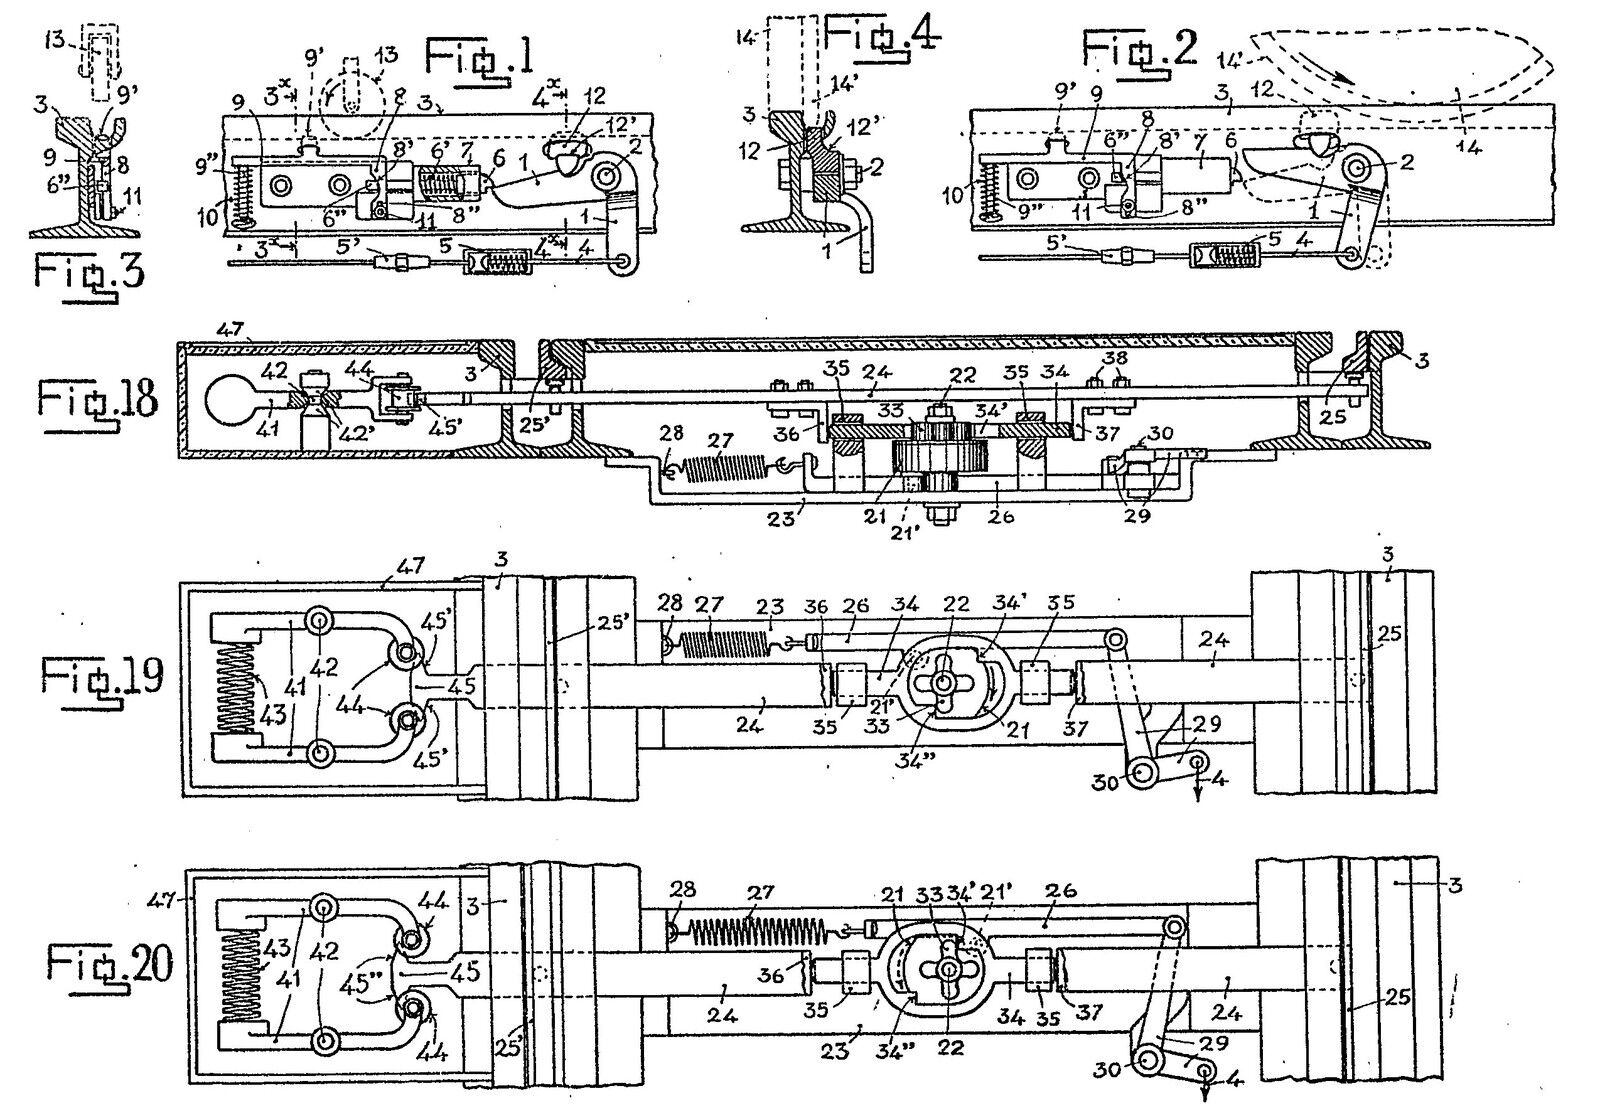 Railway history 1920-1929: Siemens, AEG, Pintsch, Lorenz AG, Knorr Bremse...